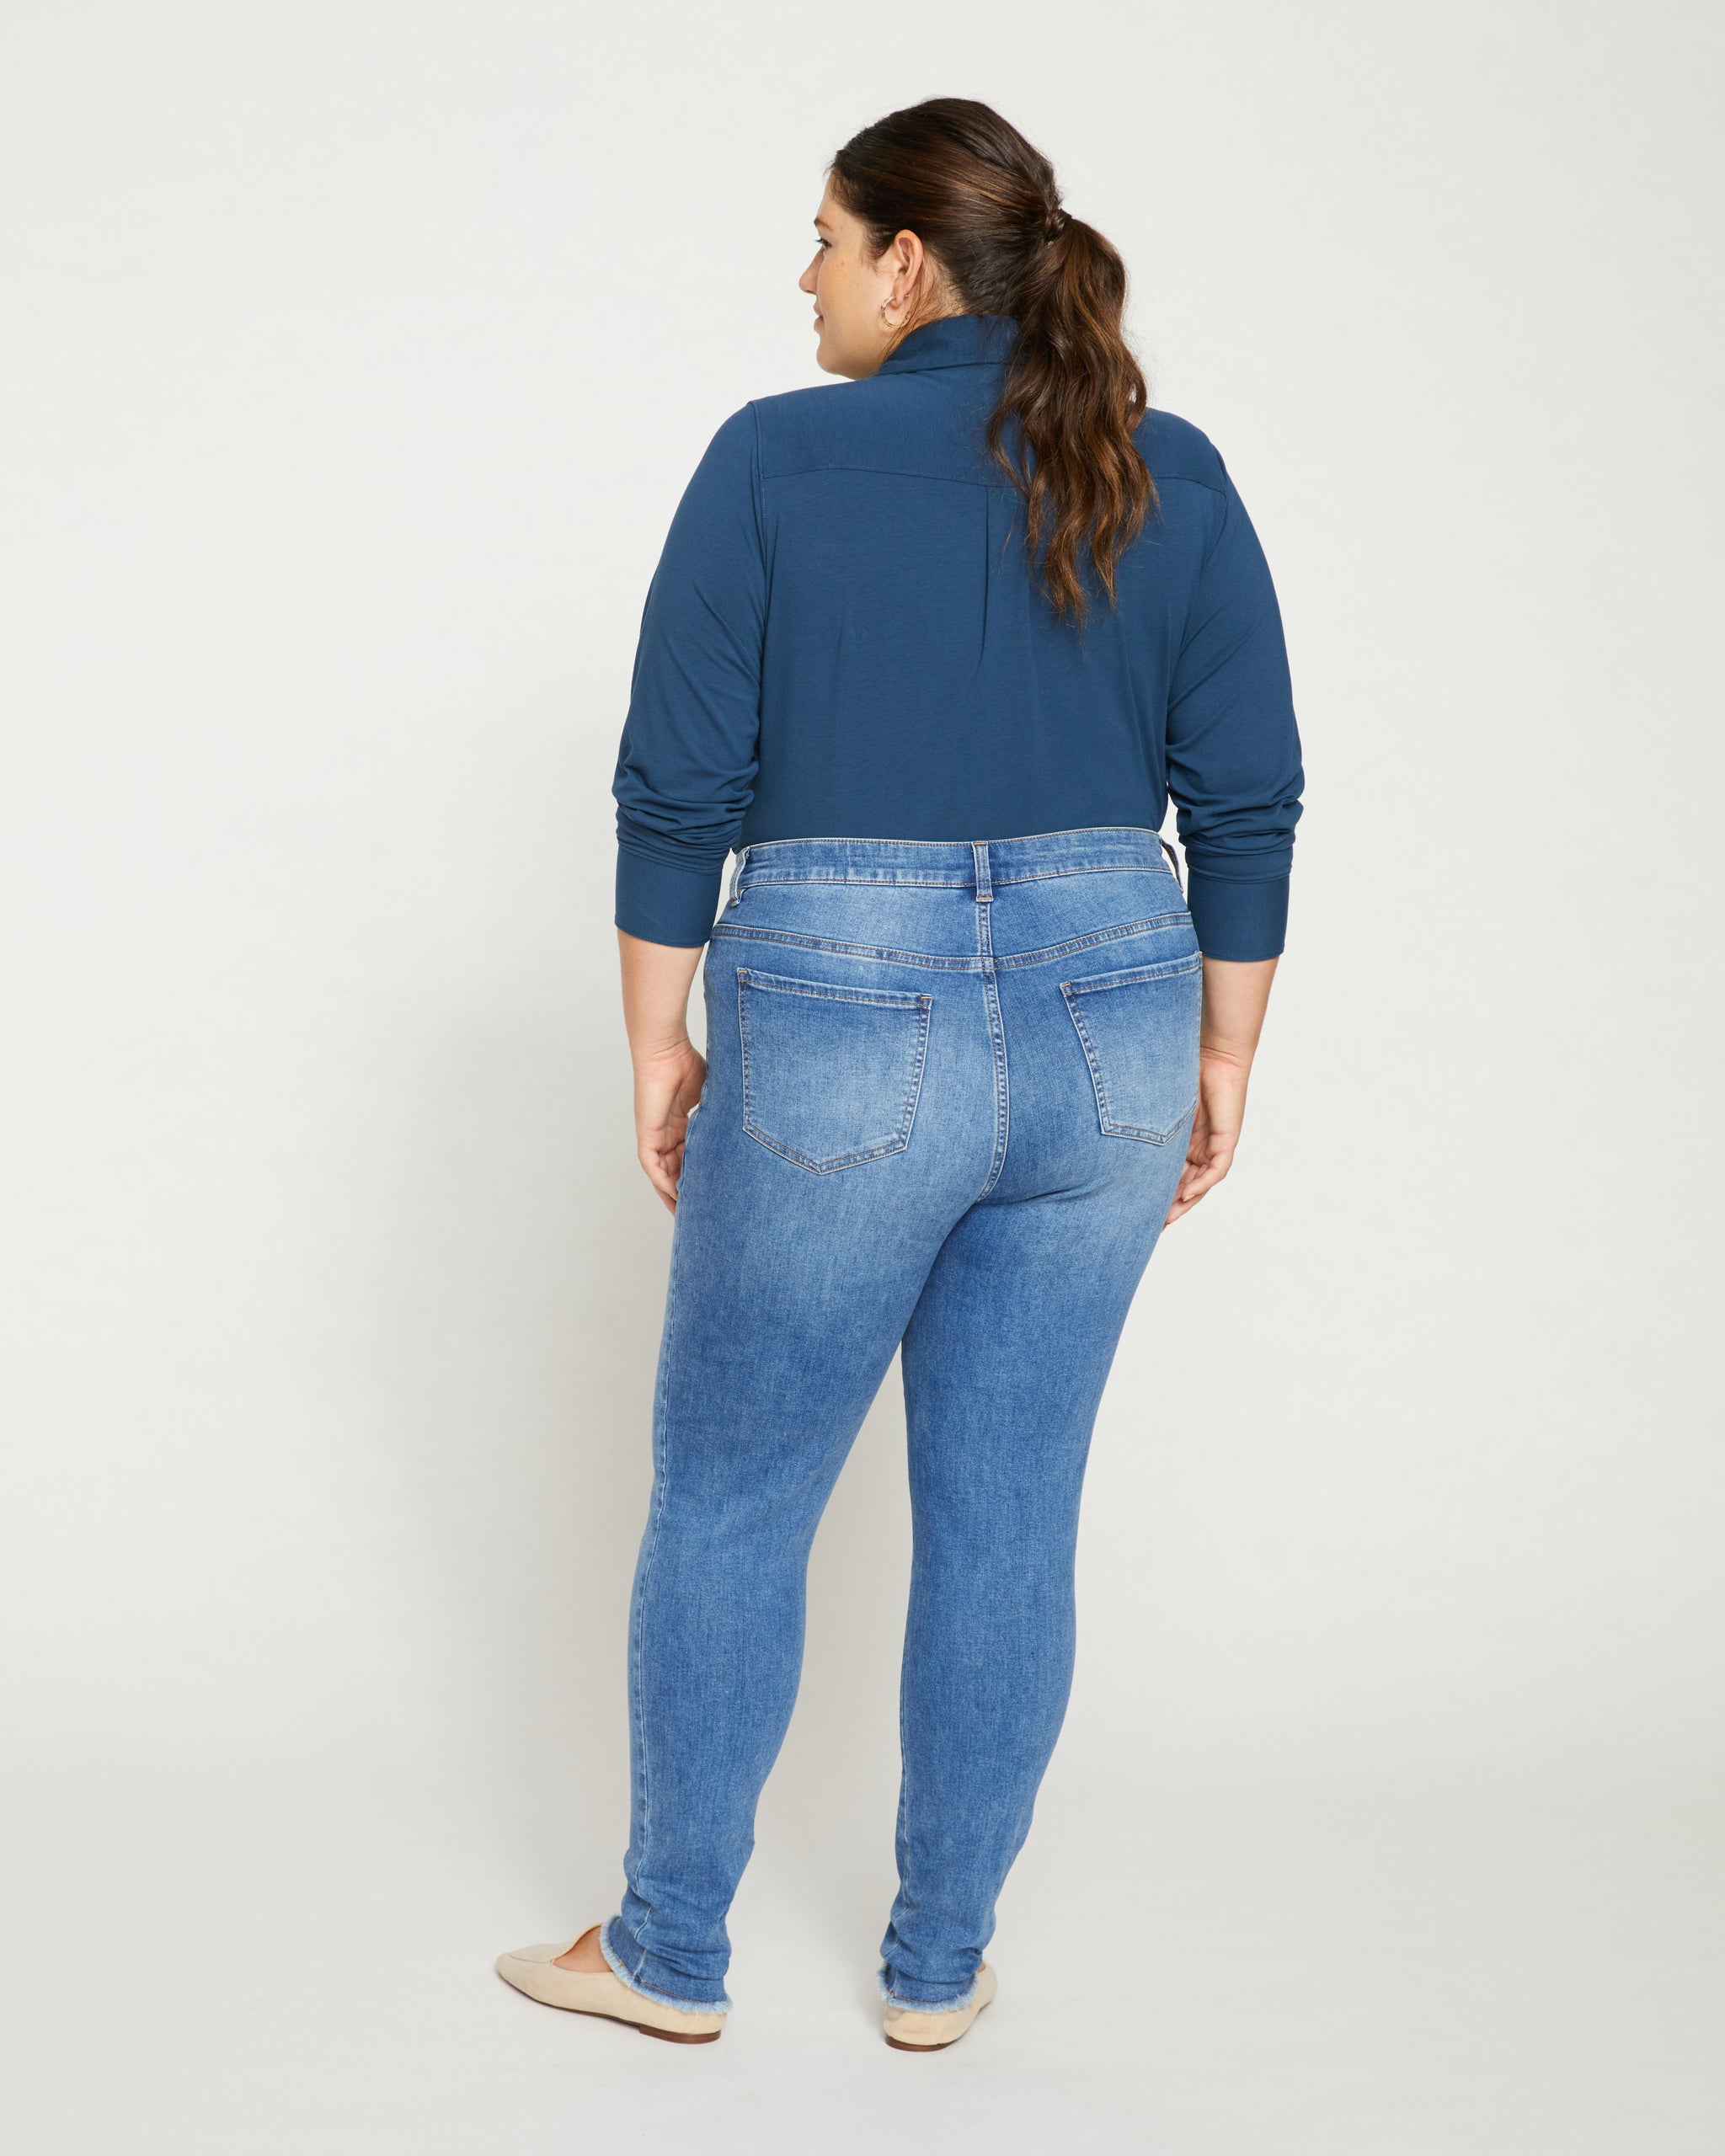 Seine High Rise Skinny Jeans 30 Inch - Bright Indigo | Universal Standard